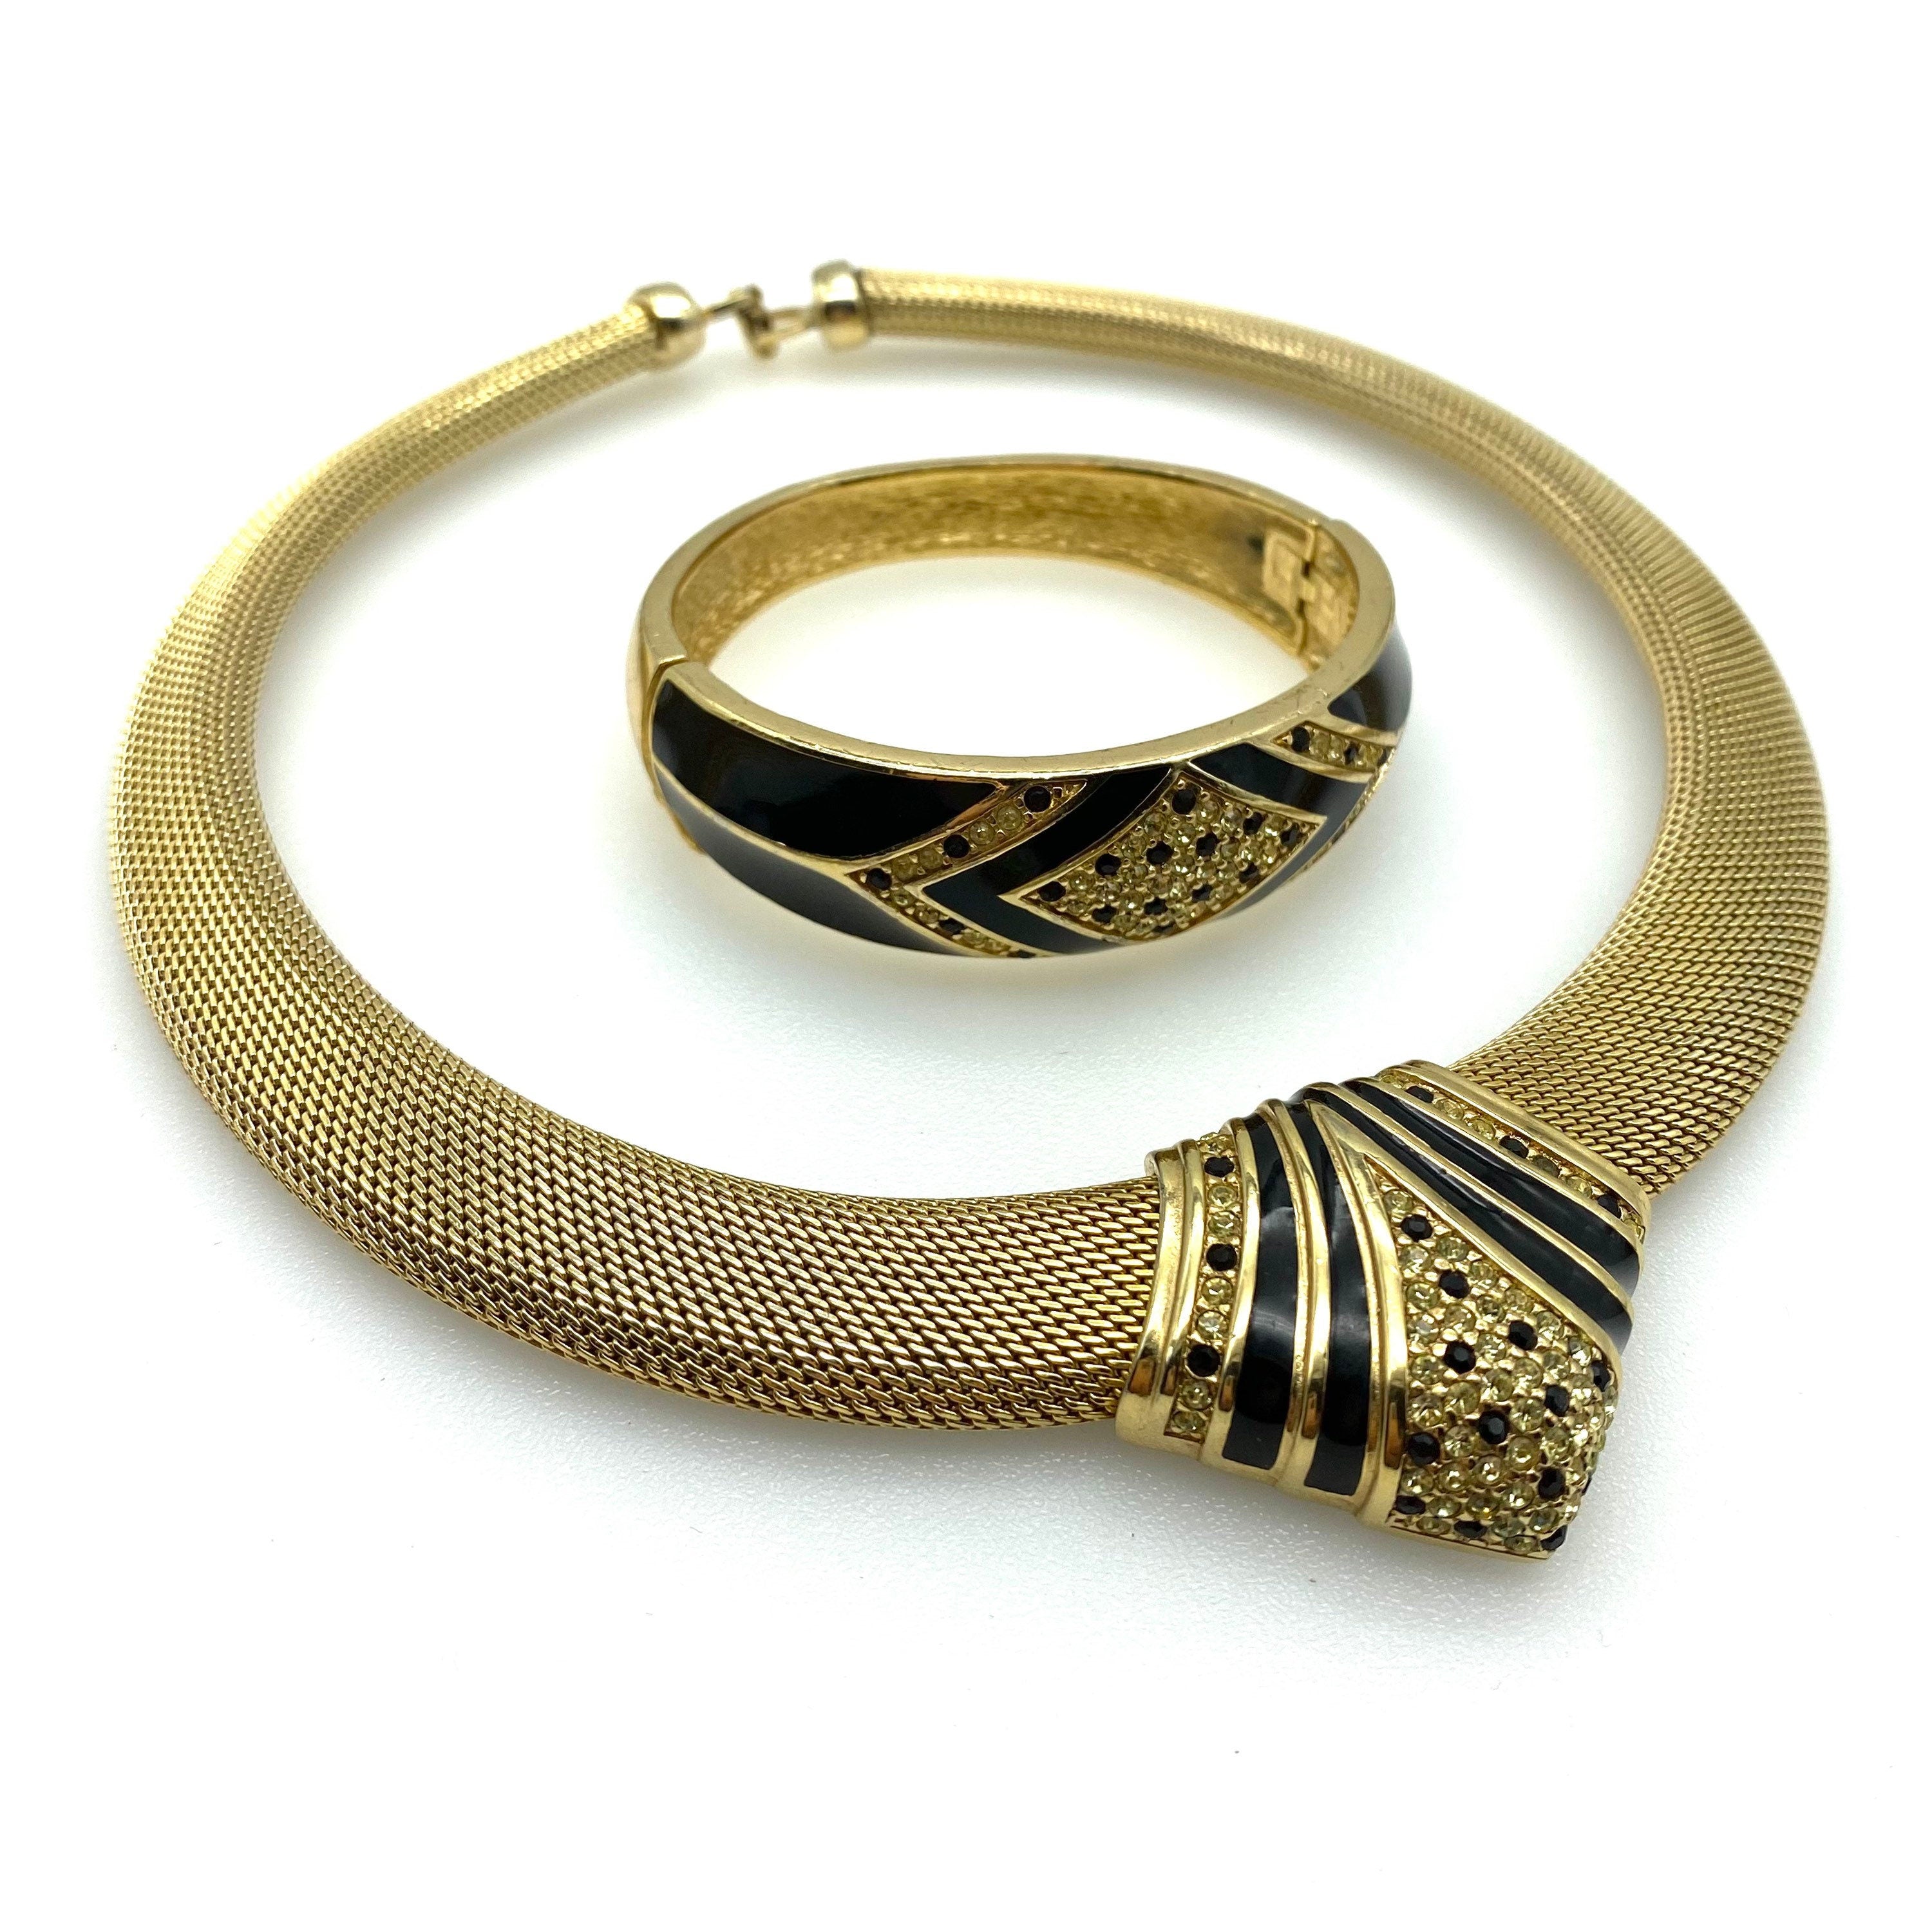 Vintage Authentic Louis Feraud Paris Earrings in Gold Plate and Rhinestones